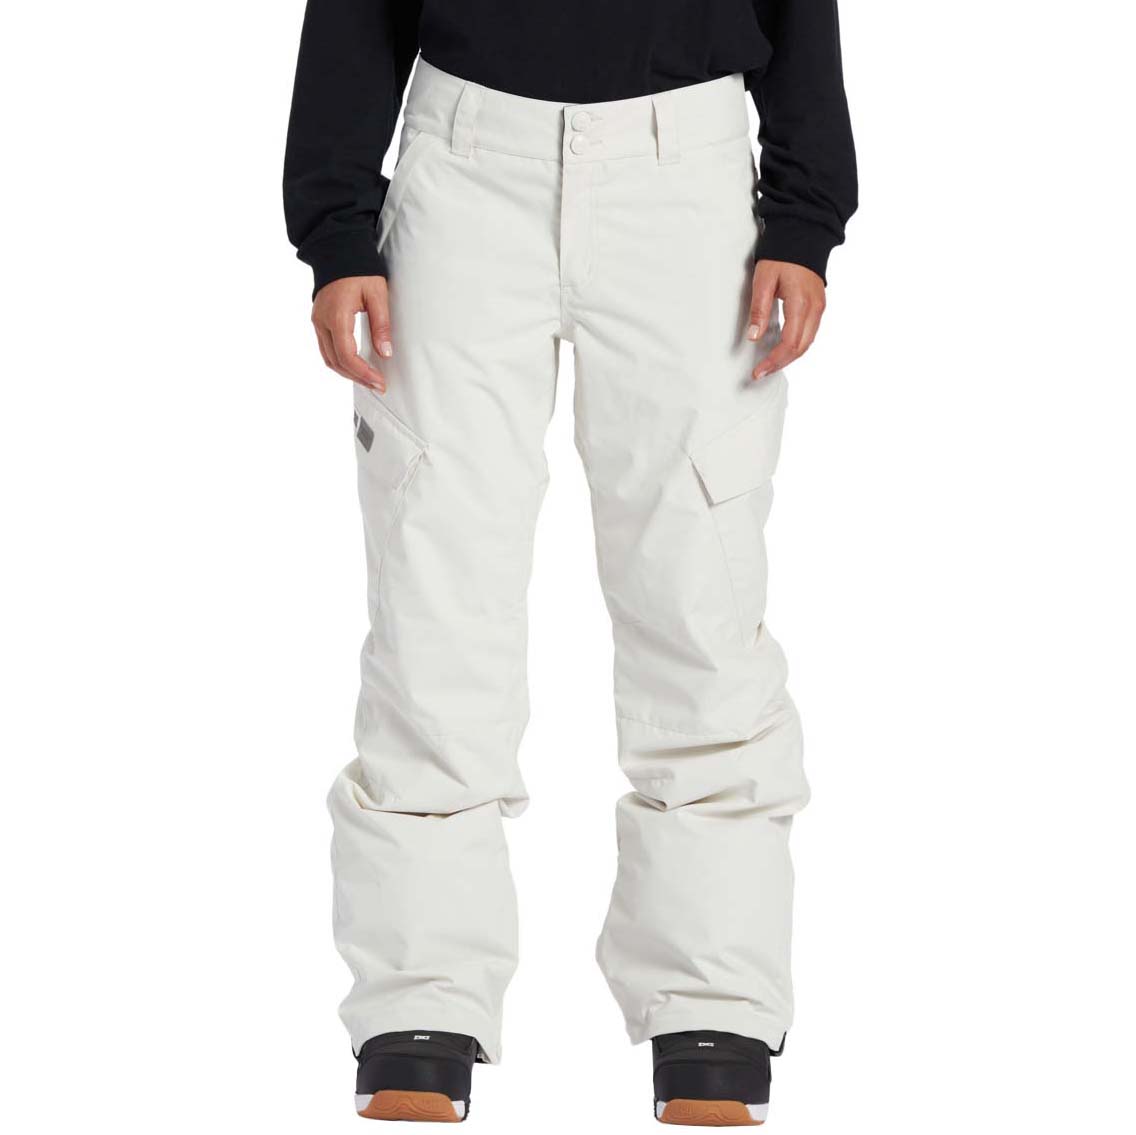 DC Nonchalant Insulated Women's Ski/Snowboard Pants